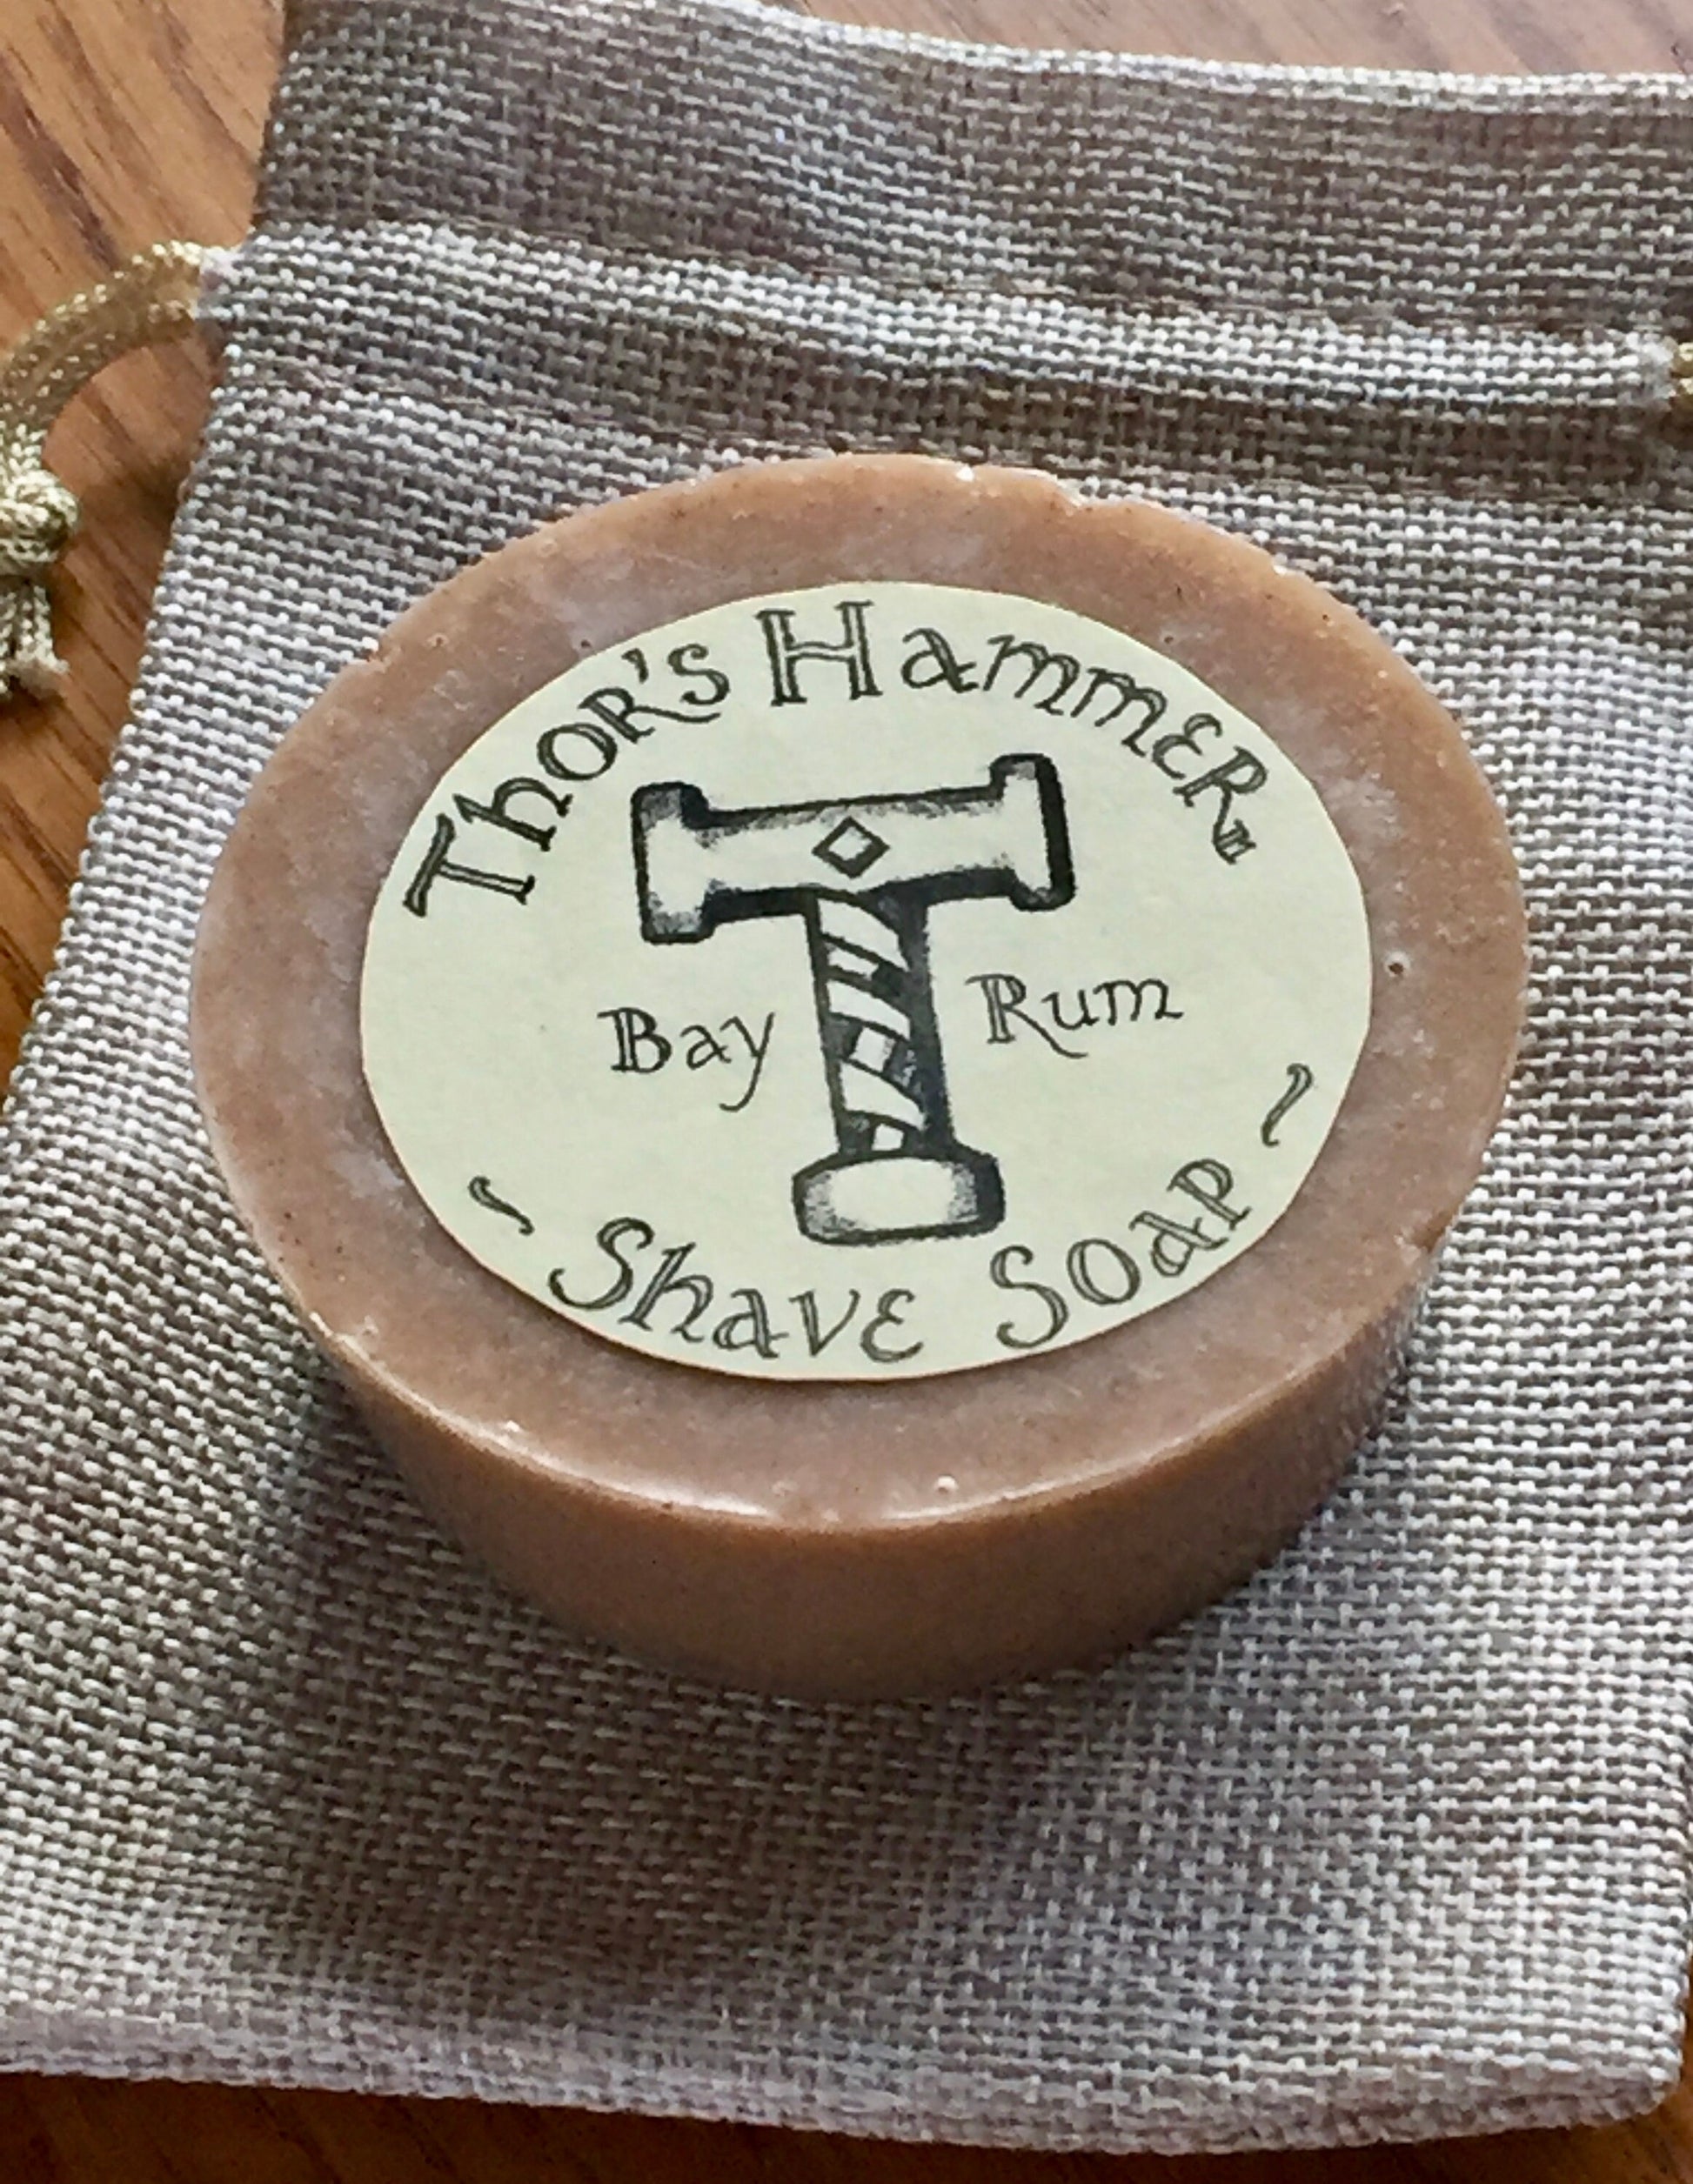 Bay Rum Natural Artisan Shave Soap Puck